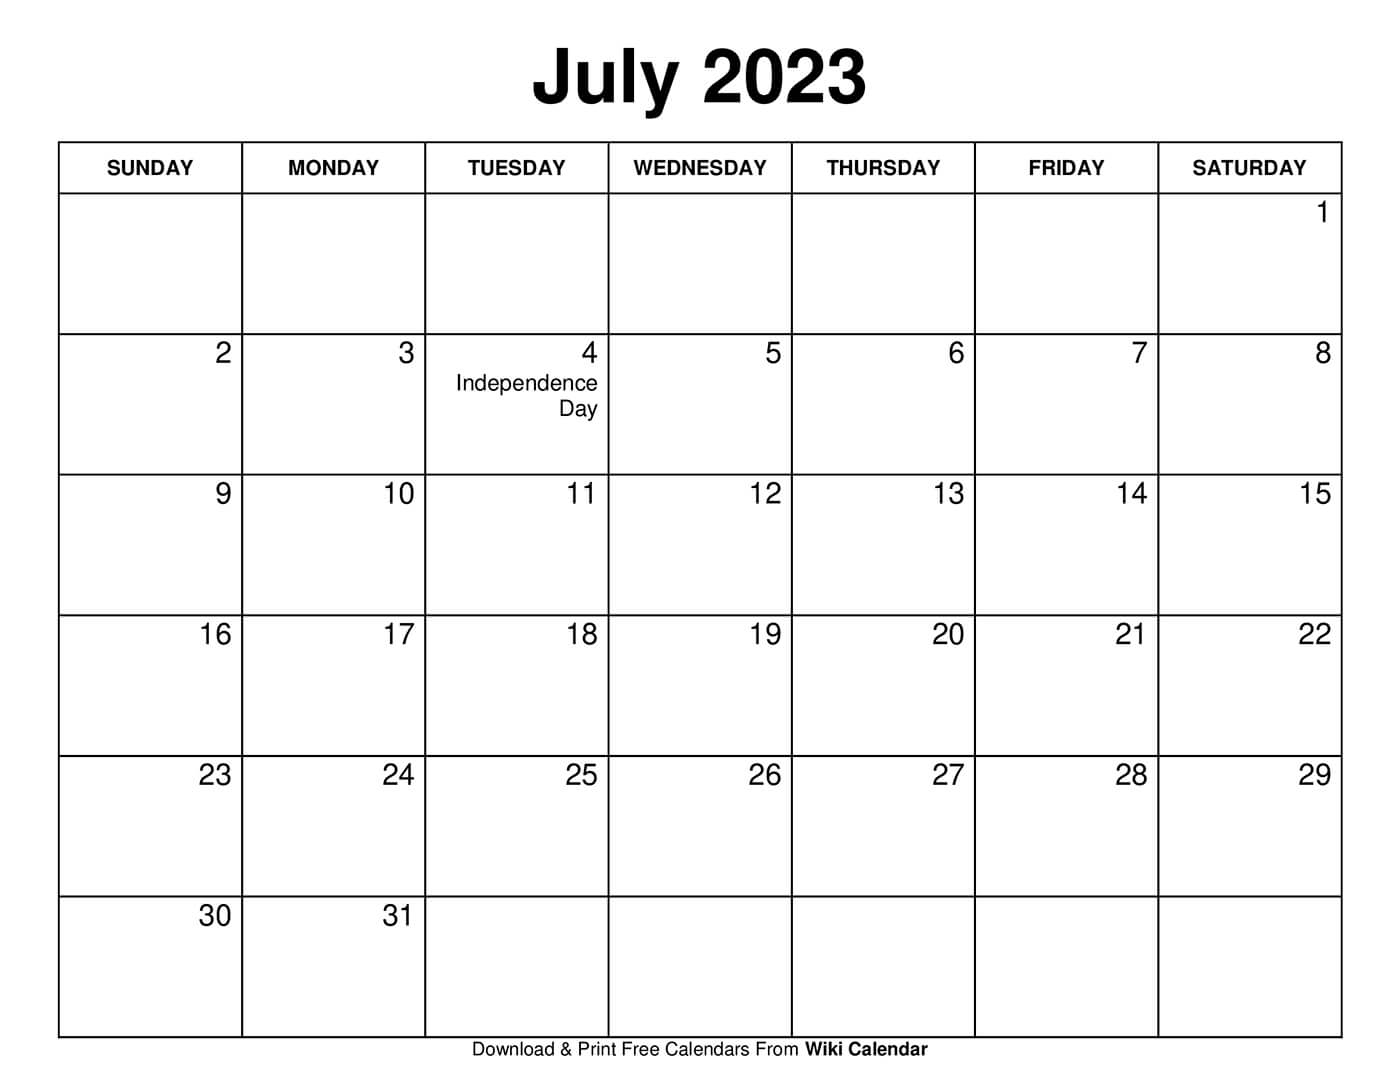 Free Printable July 2023 Calendars â€“ Wiki Calendar